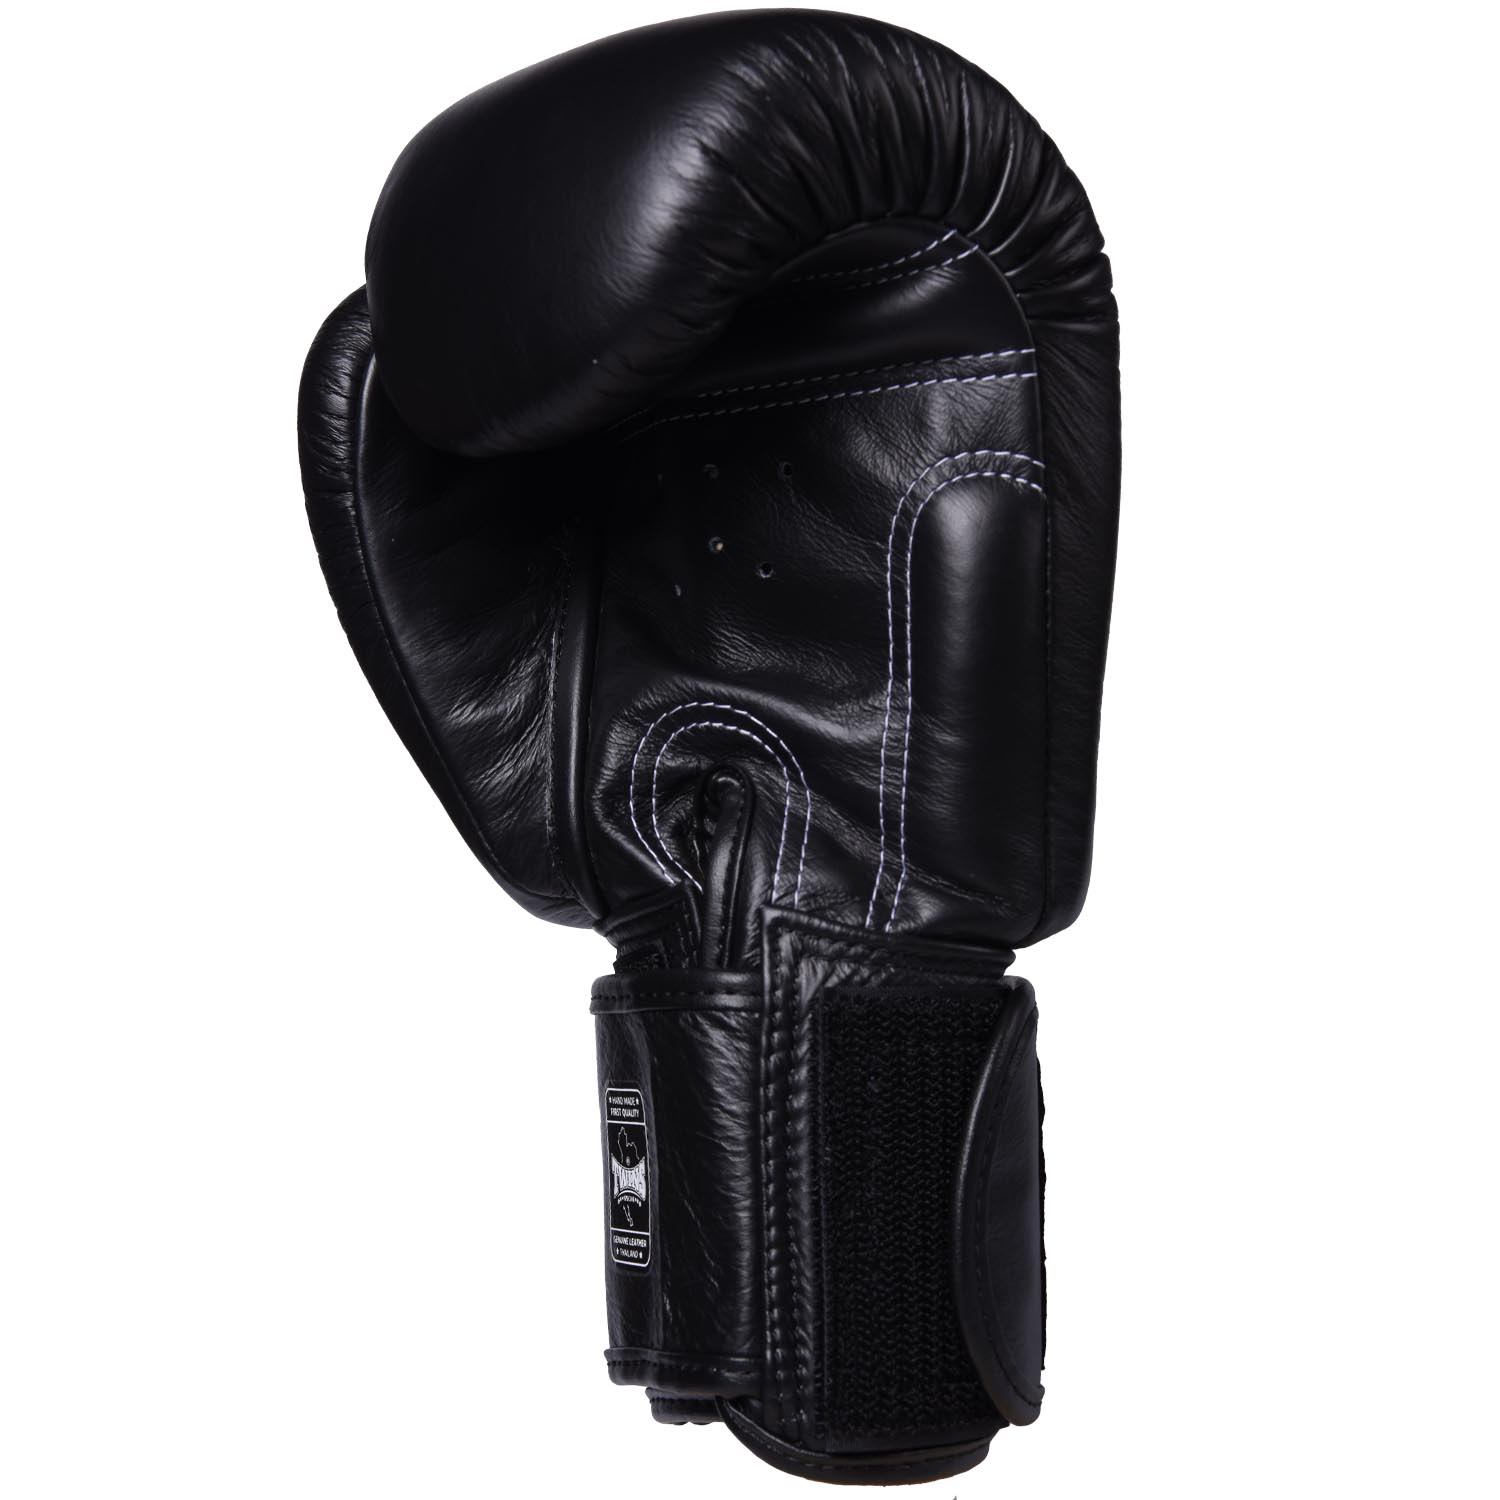 Boxhandschuhe Muay Thai Kickboxen Handschuhe Leder Twins Special BGVL3 Schwarz 